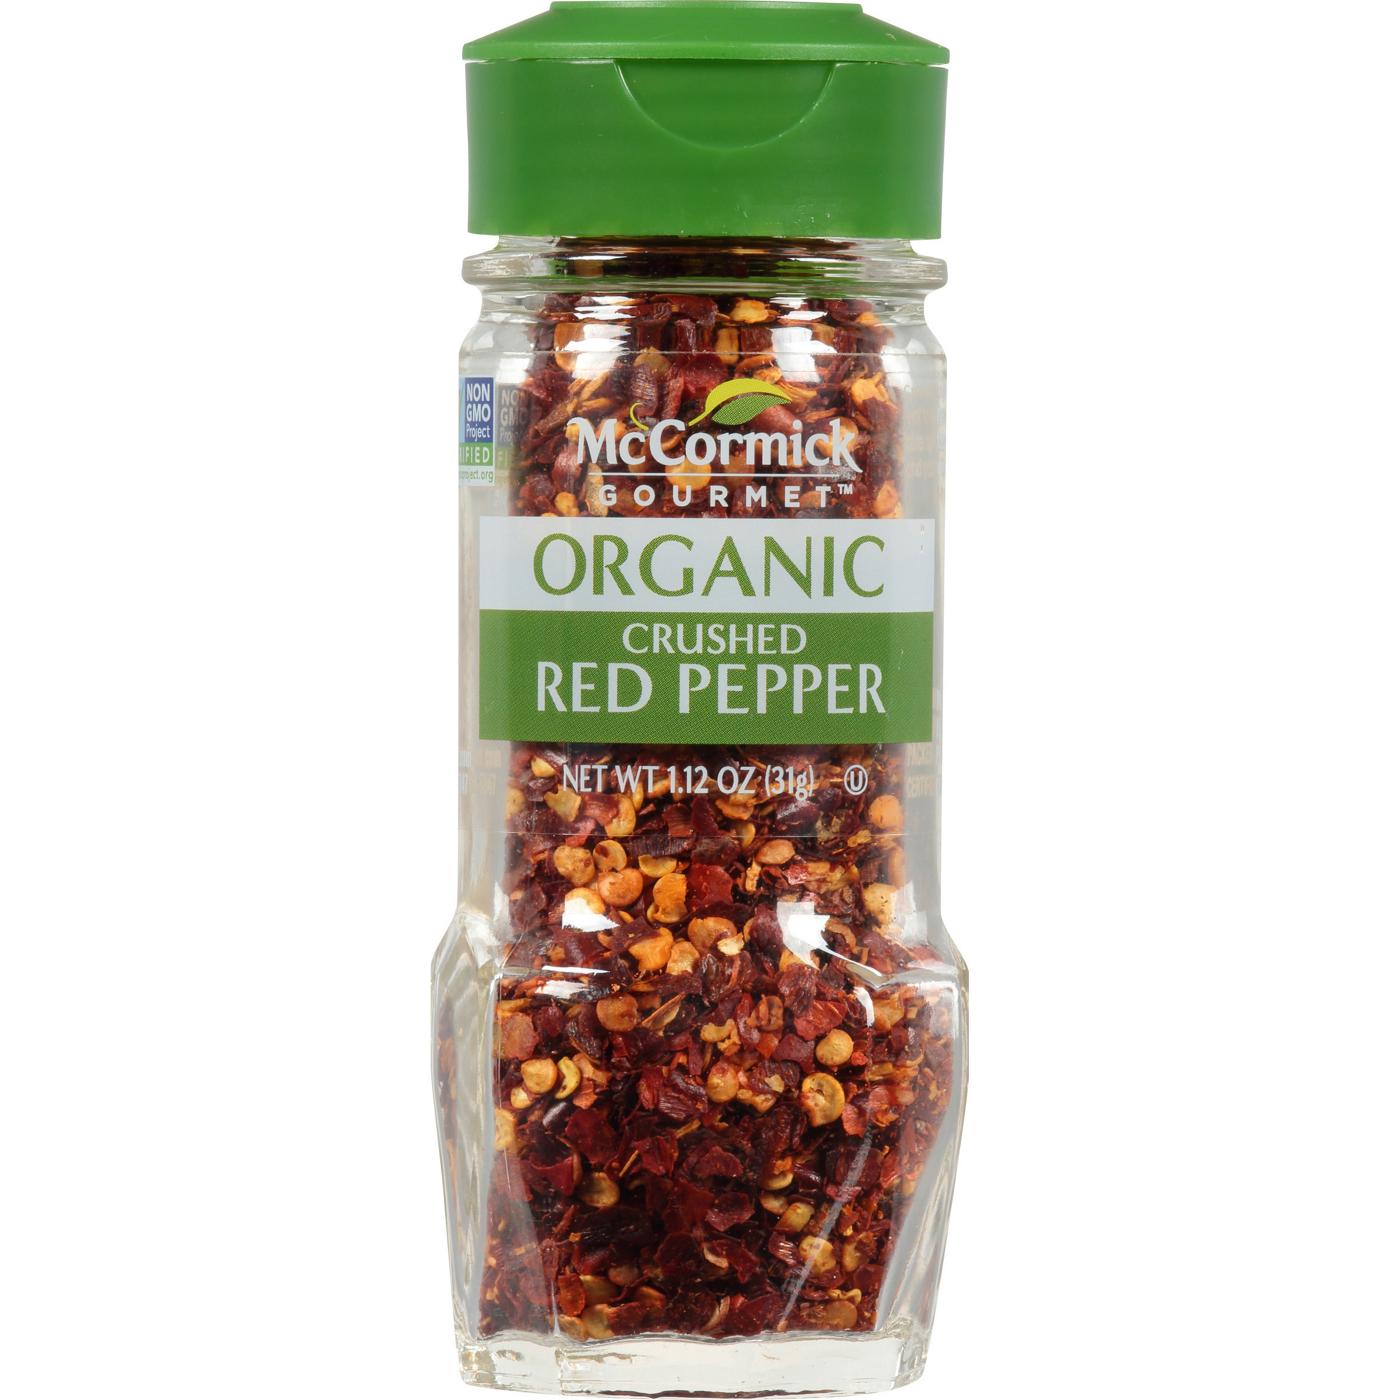 McCormick Gourmet Organic Crushed Red Pepper; image 1 of 4